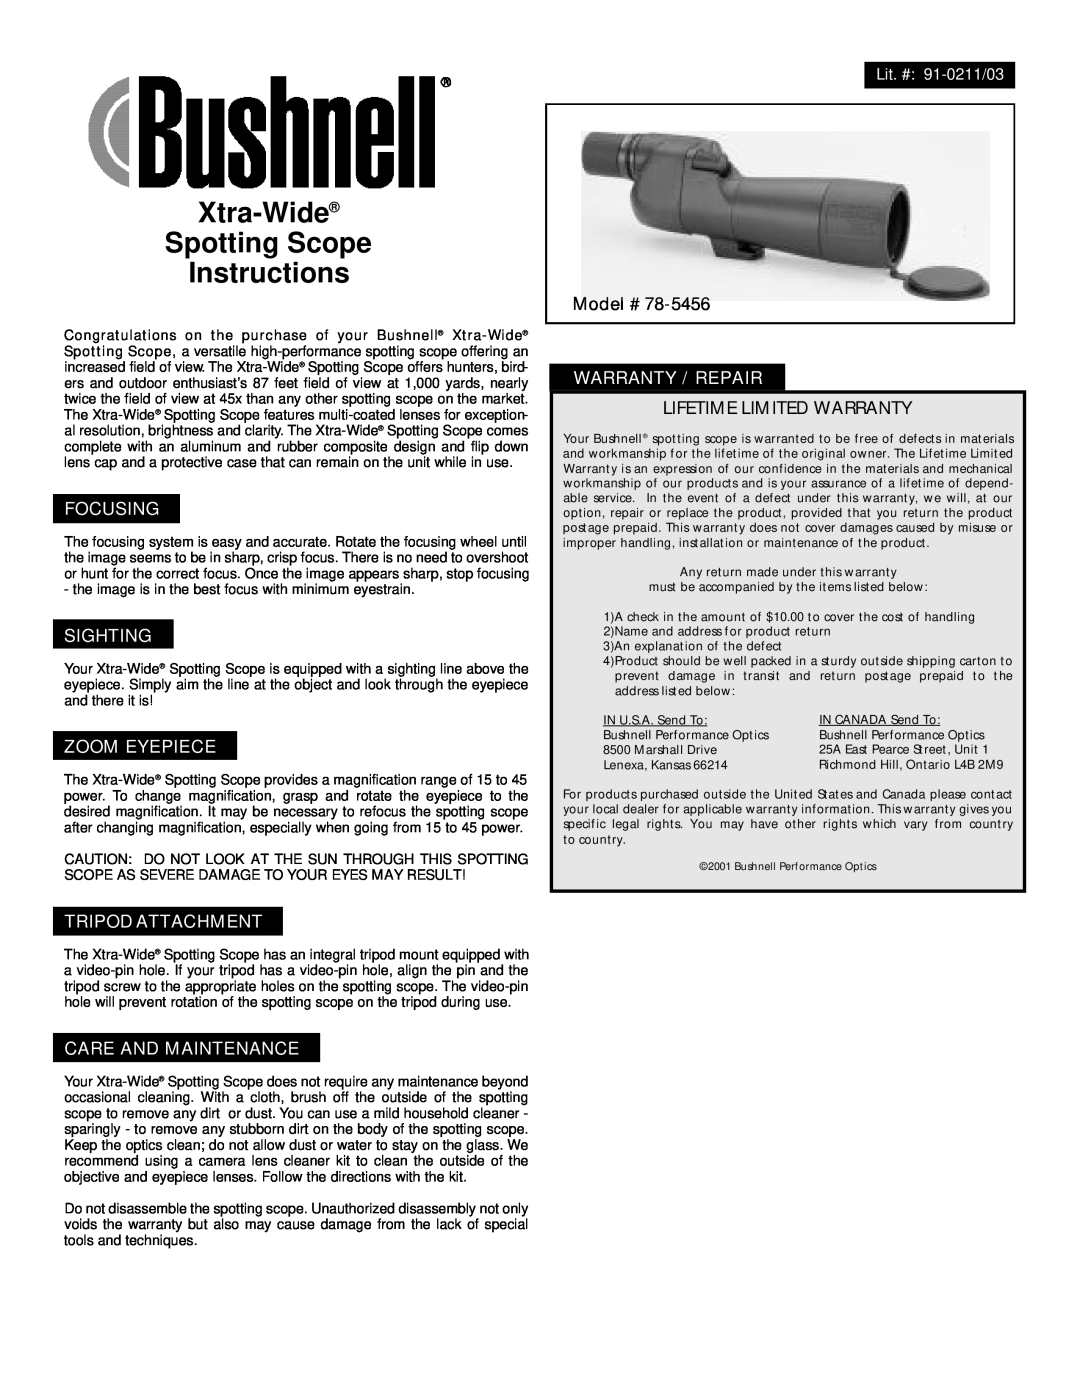 Bushnell 78-5456 warranty Xtra-Wide Spotting Scope Instructions, Focusing, Sighting, Zoom Eyepiece, Tripod Attachment 